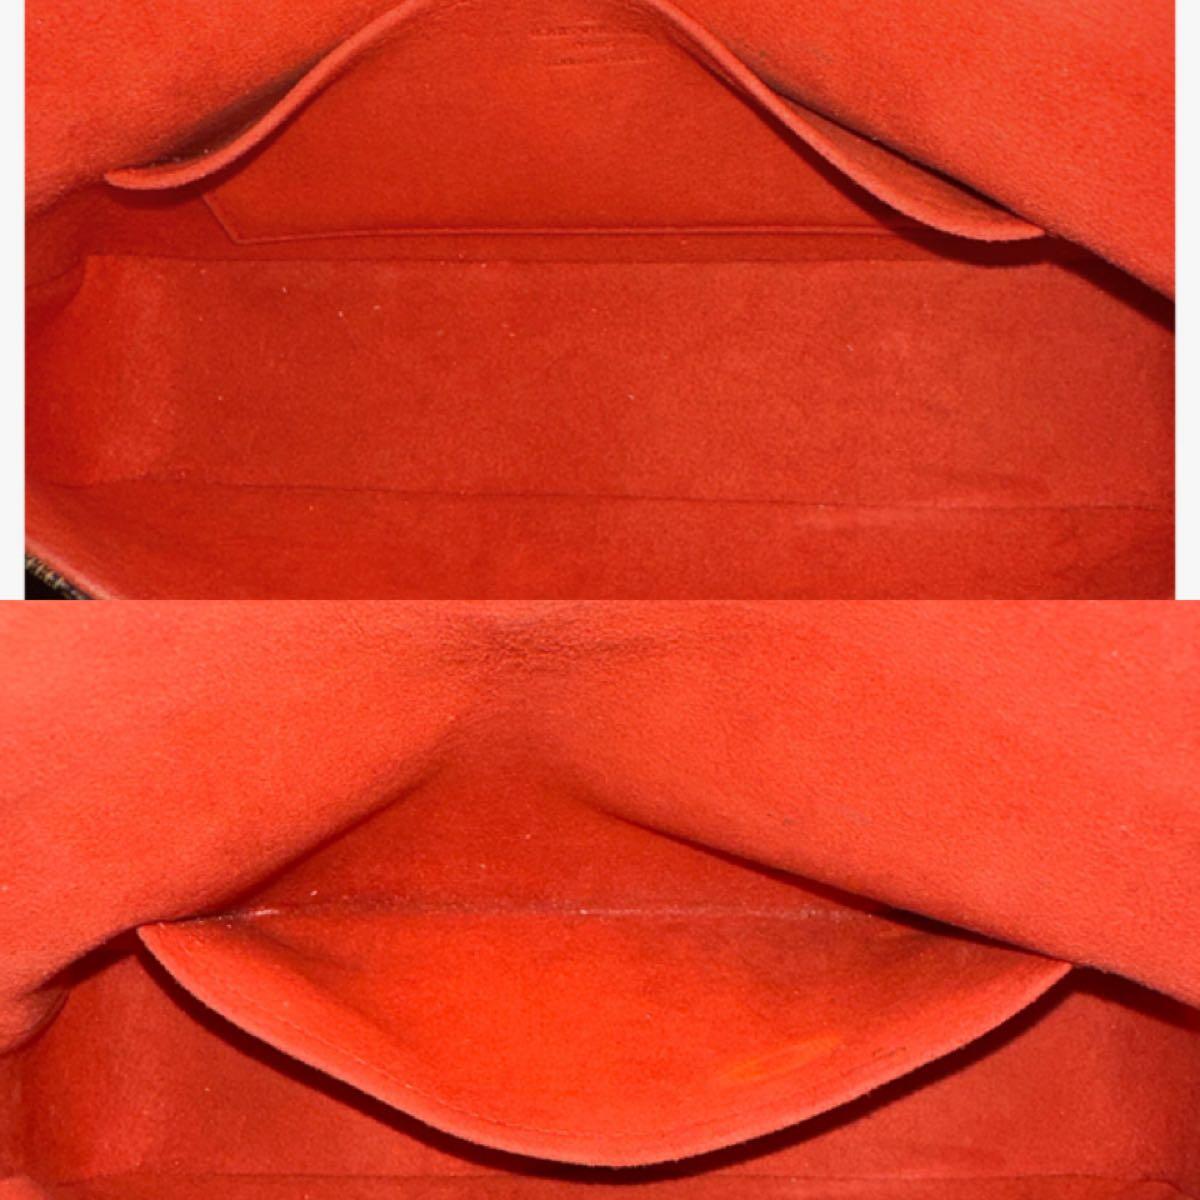 Authentic Louis Vuitton Damier Ebene Recolecta Shoulder Bag For $695 In San  Dimas, CA